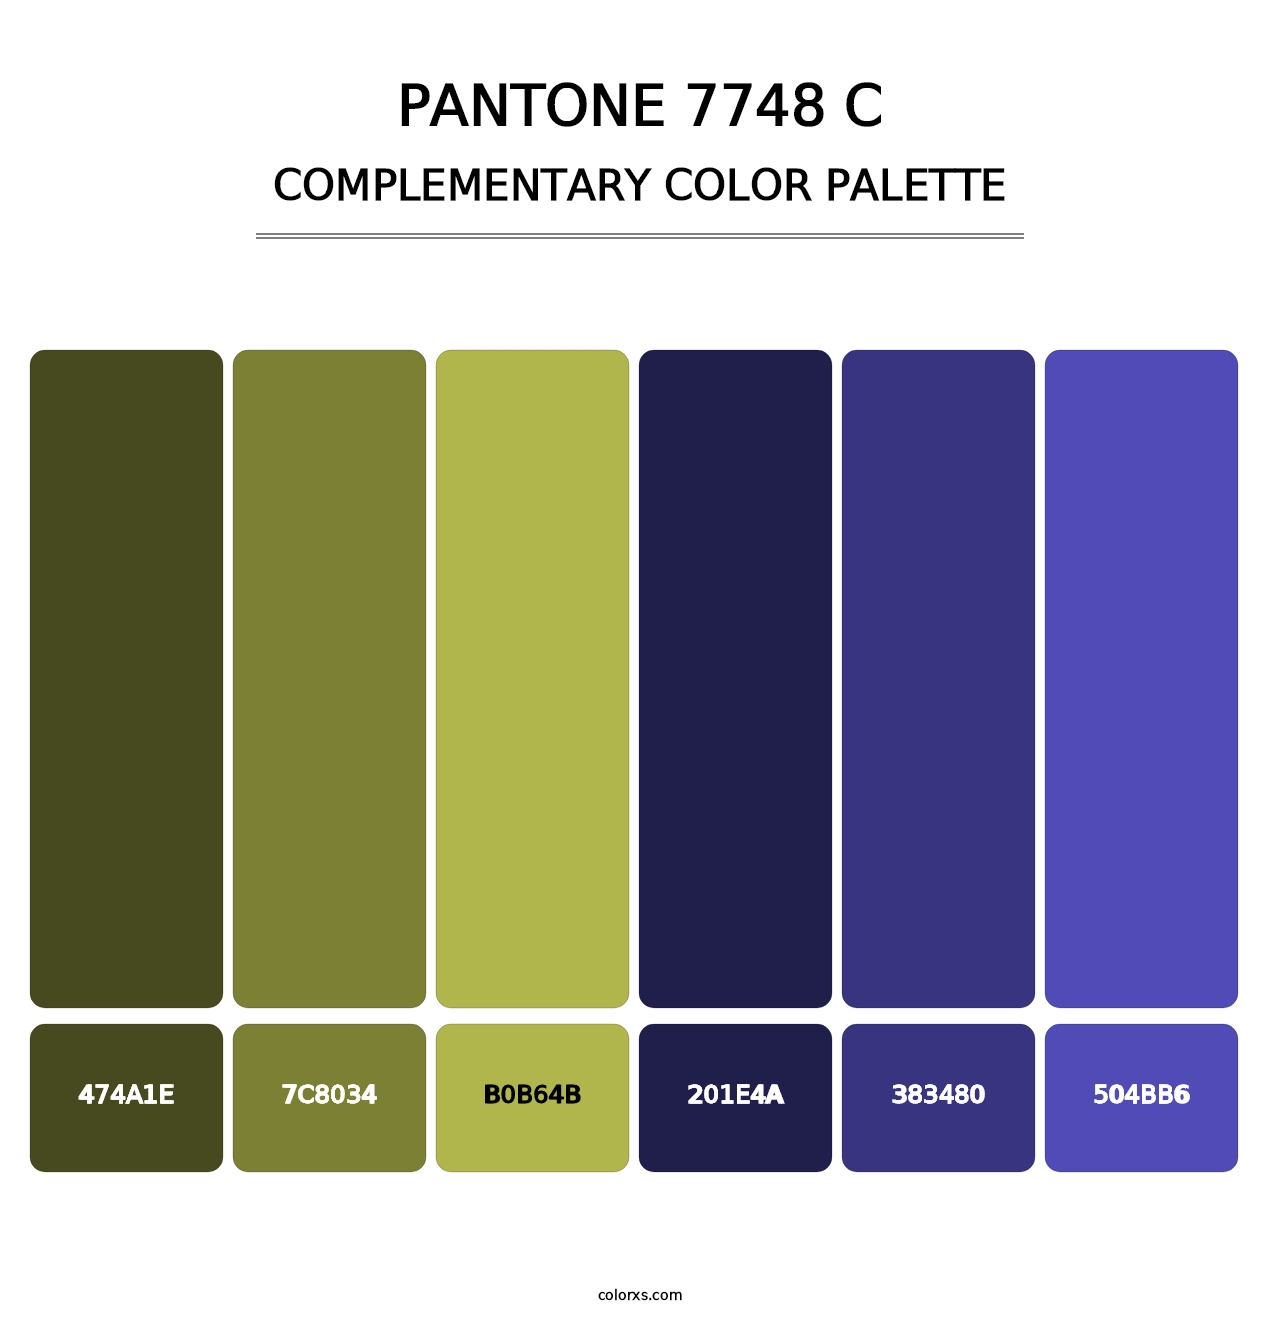 PANTONE 7748 C - Complementary Color Palette